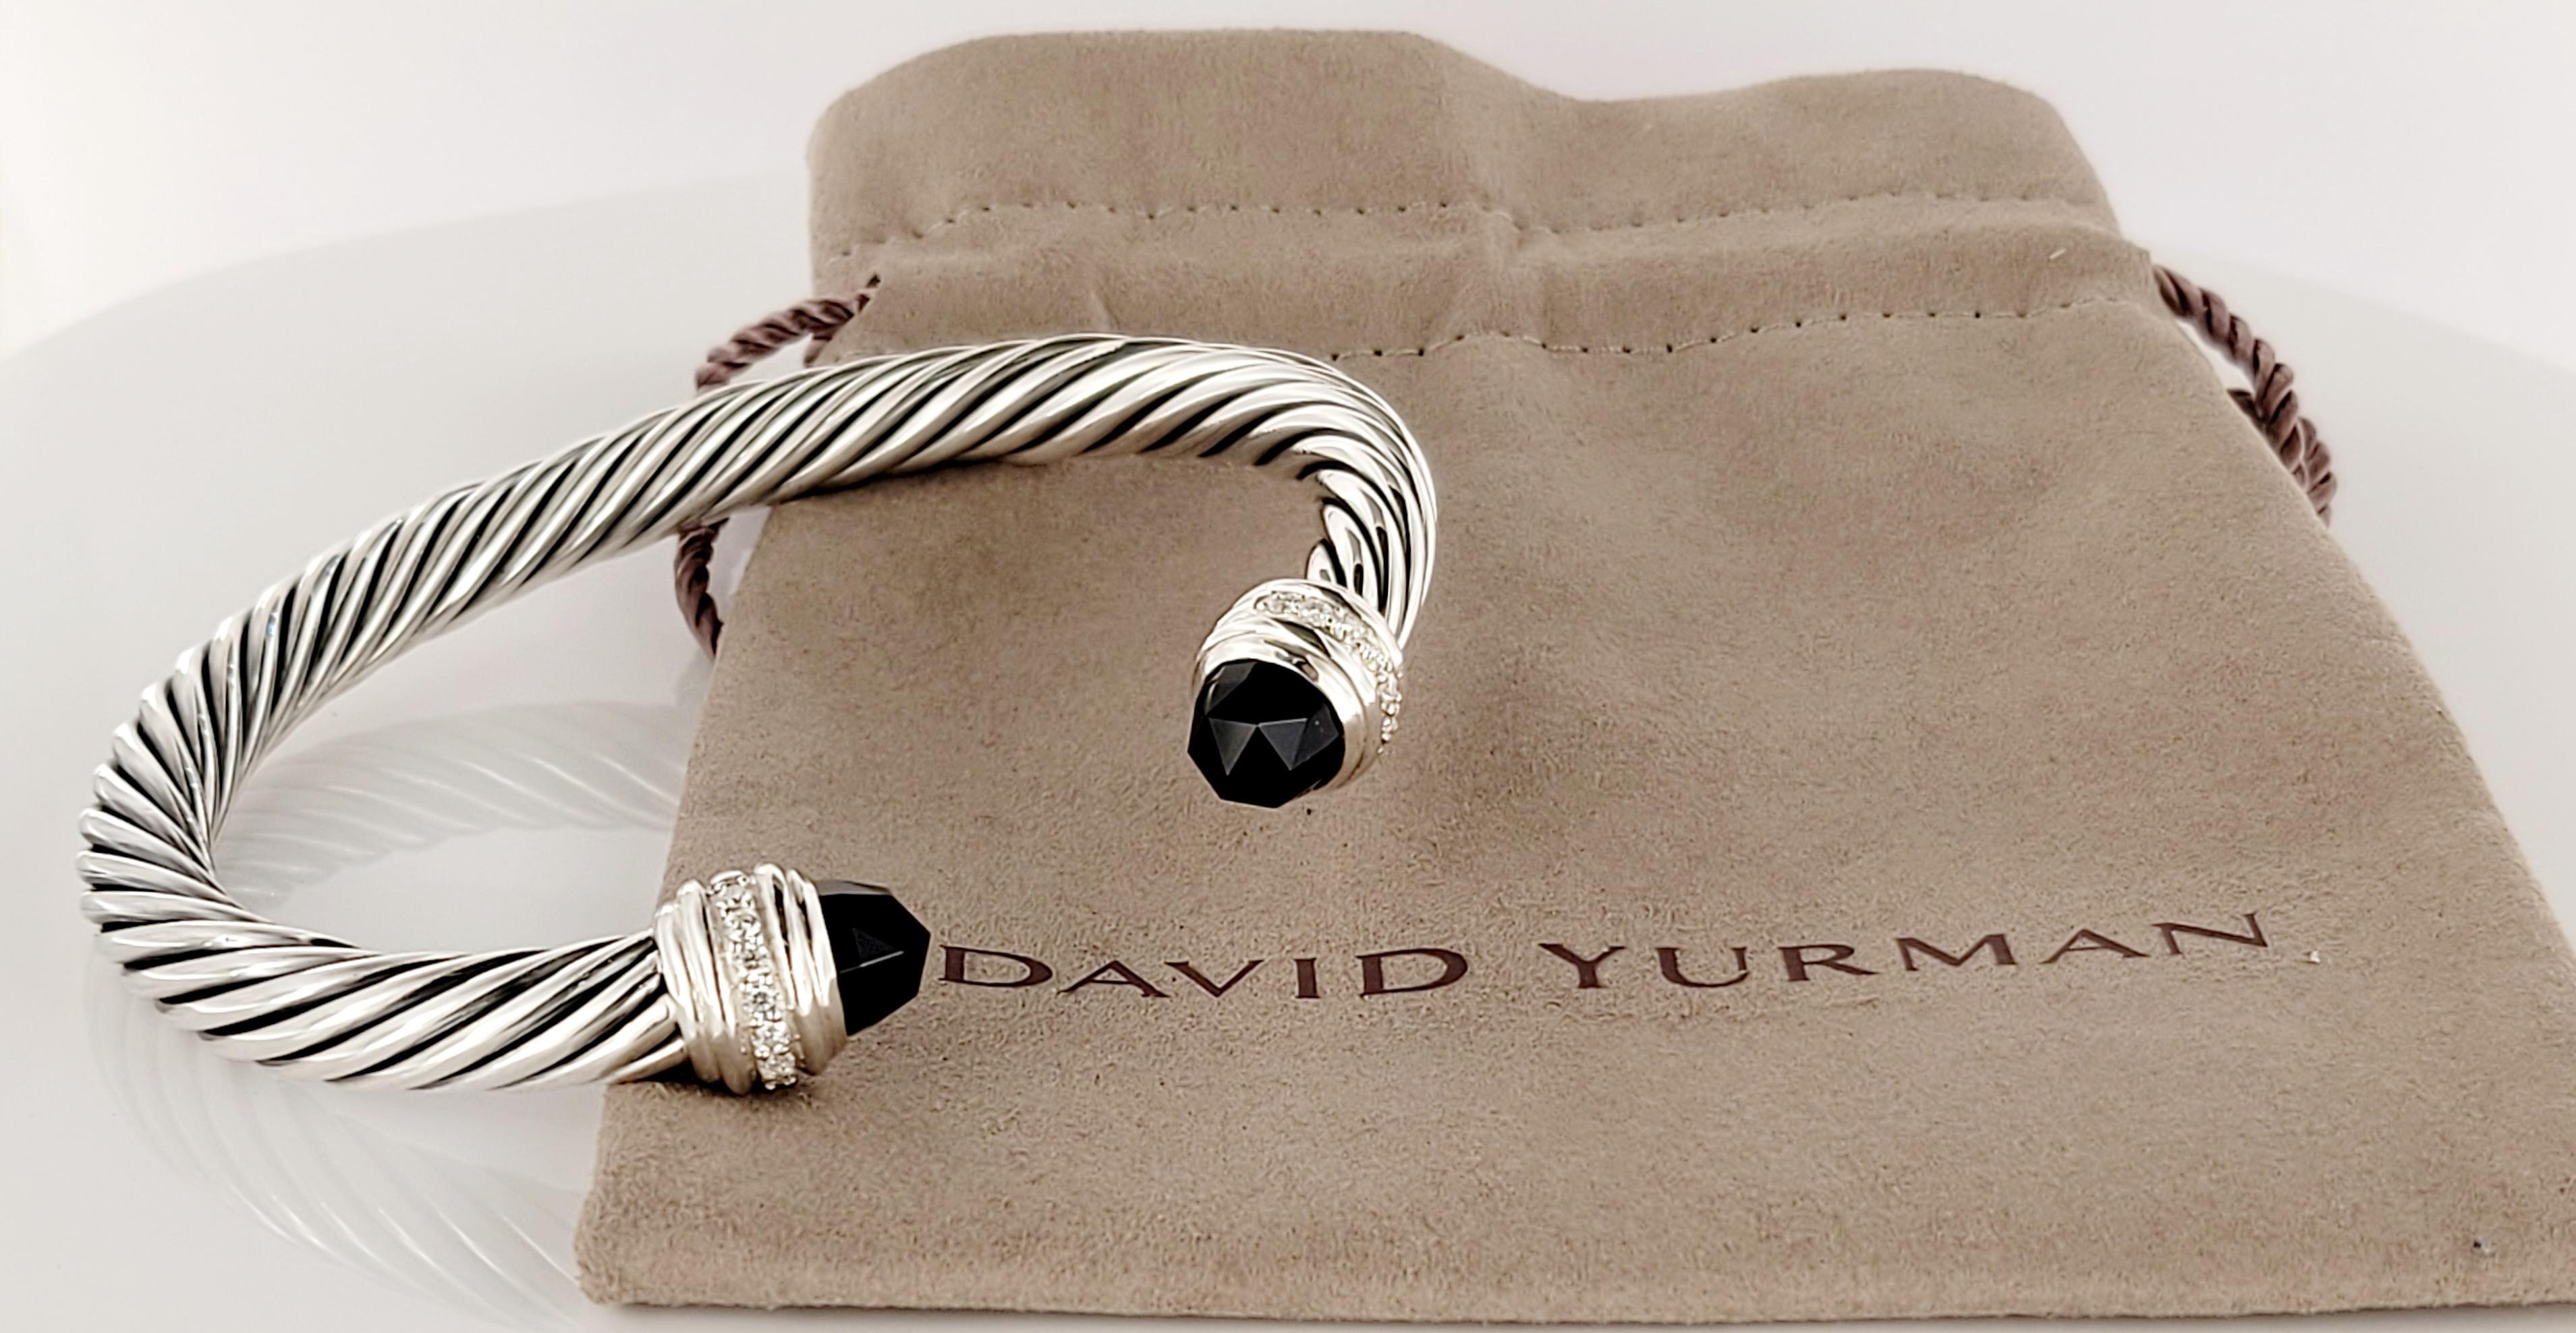 Brand David Yurman
Sterling Silver
Bracelet width 7mm
Mint condition 
Black Onyx
Pave- stone diamond 0.41ct
Weight 43.7gr
Retail price$ 1700
Comes with David Yurman pouch